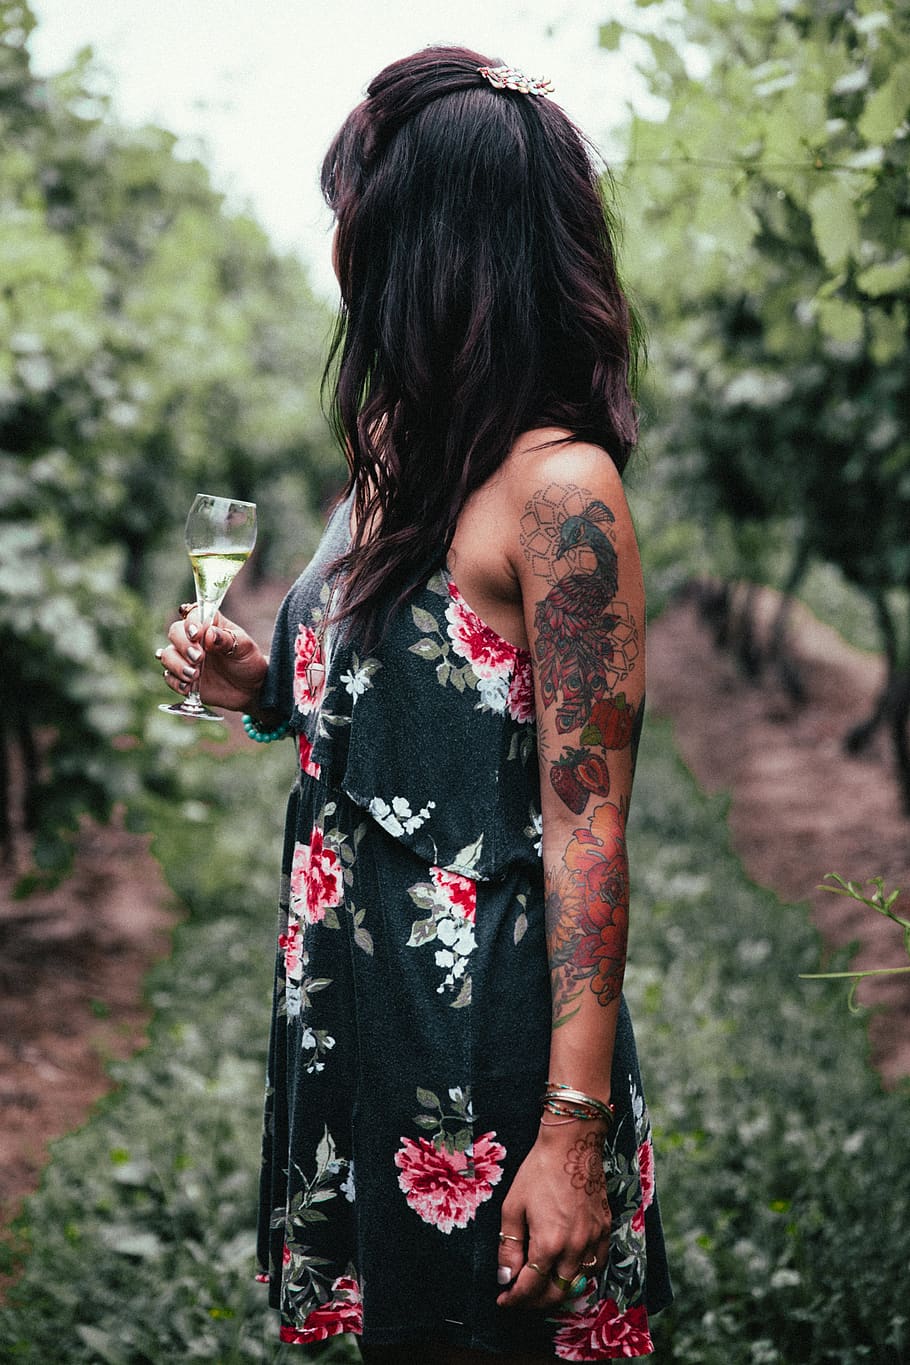 woman, wine, vineyard, female, lady, person, nature, outdoors, plants, vegetation